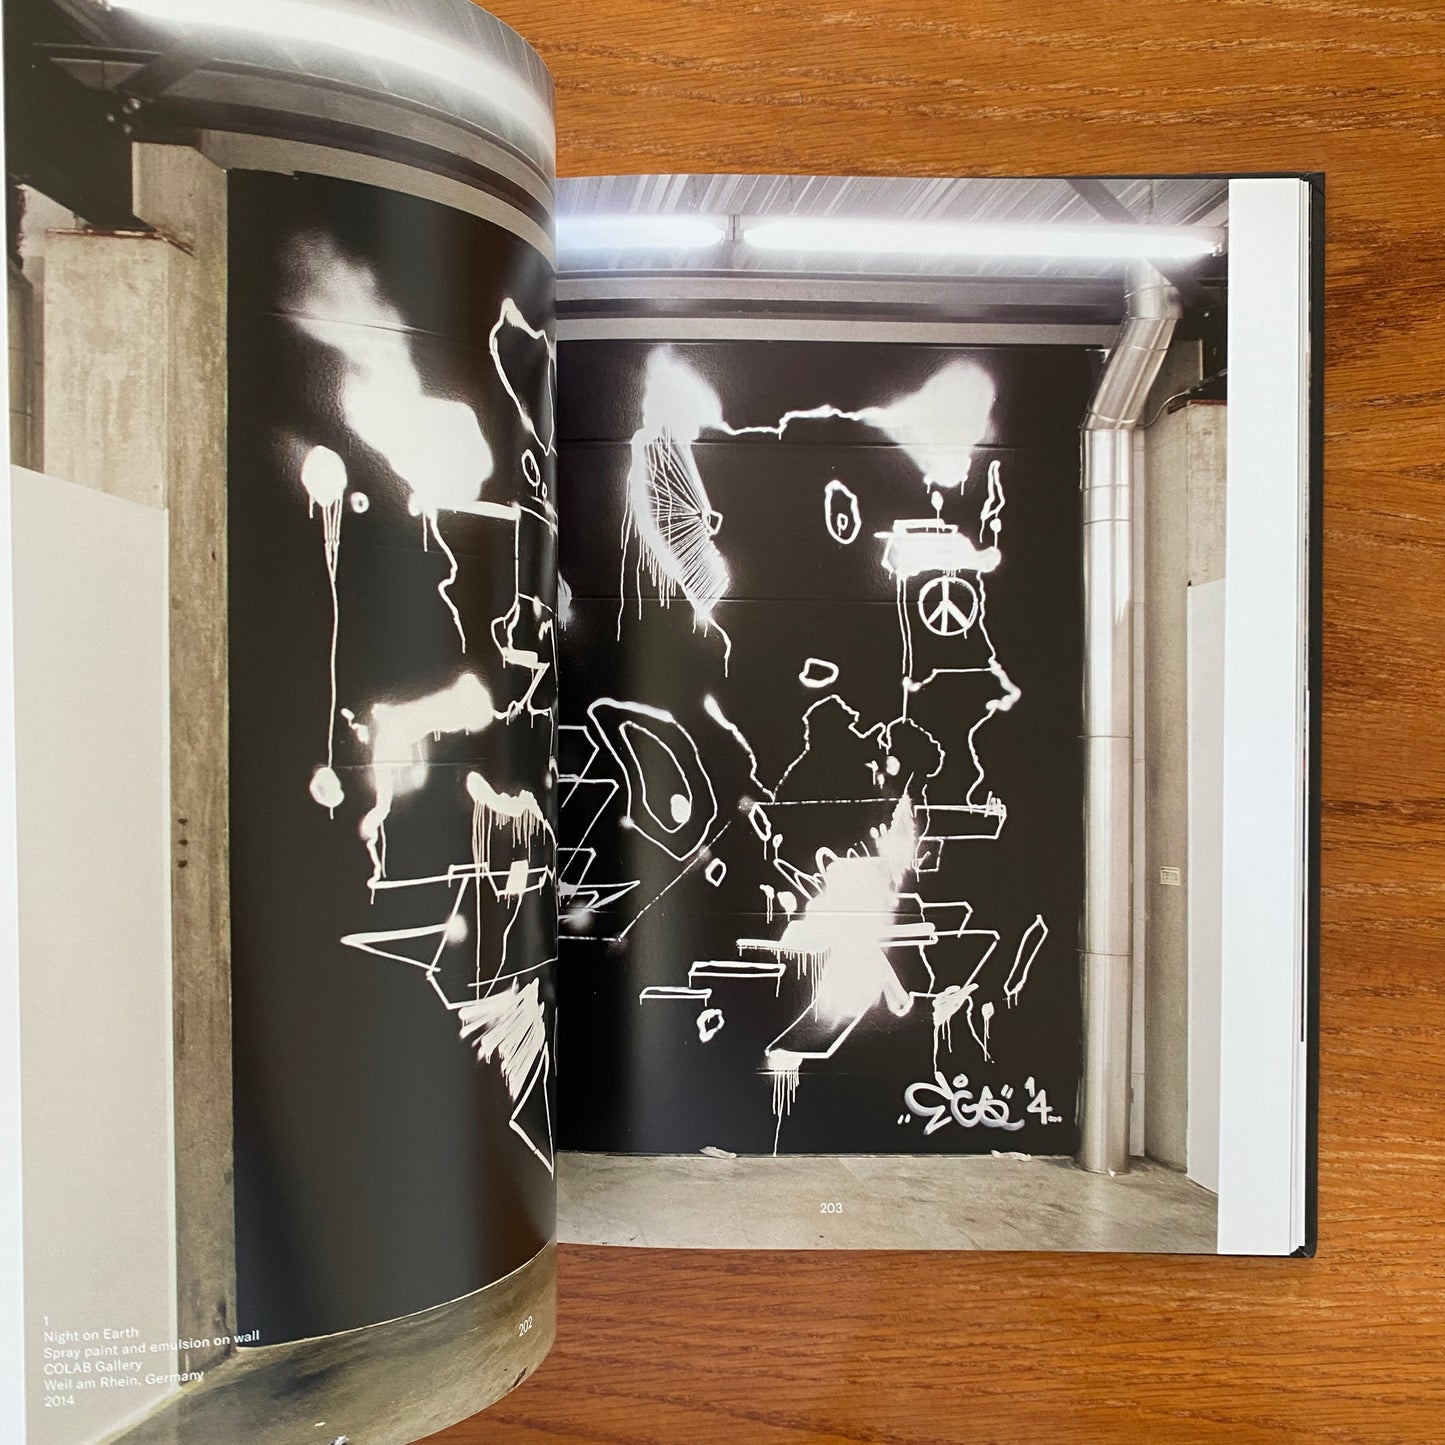 The Art Of Writing Your Name - Patrick Hartl & Christian Hundertmark